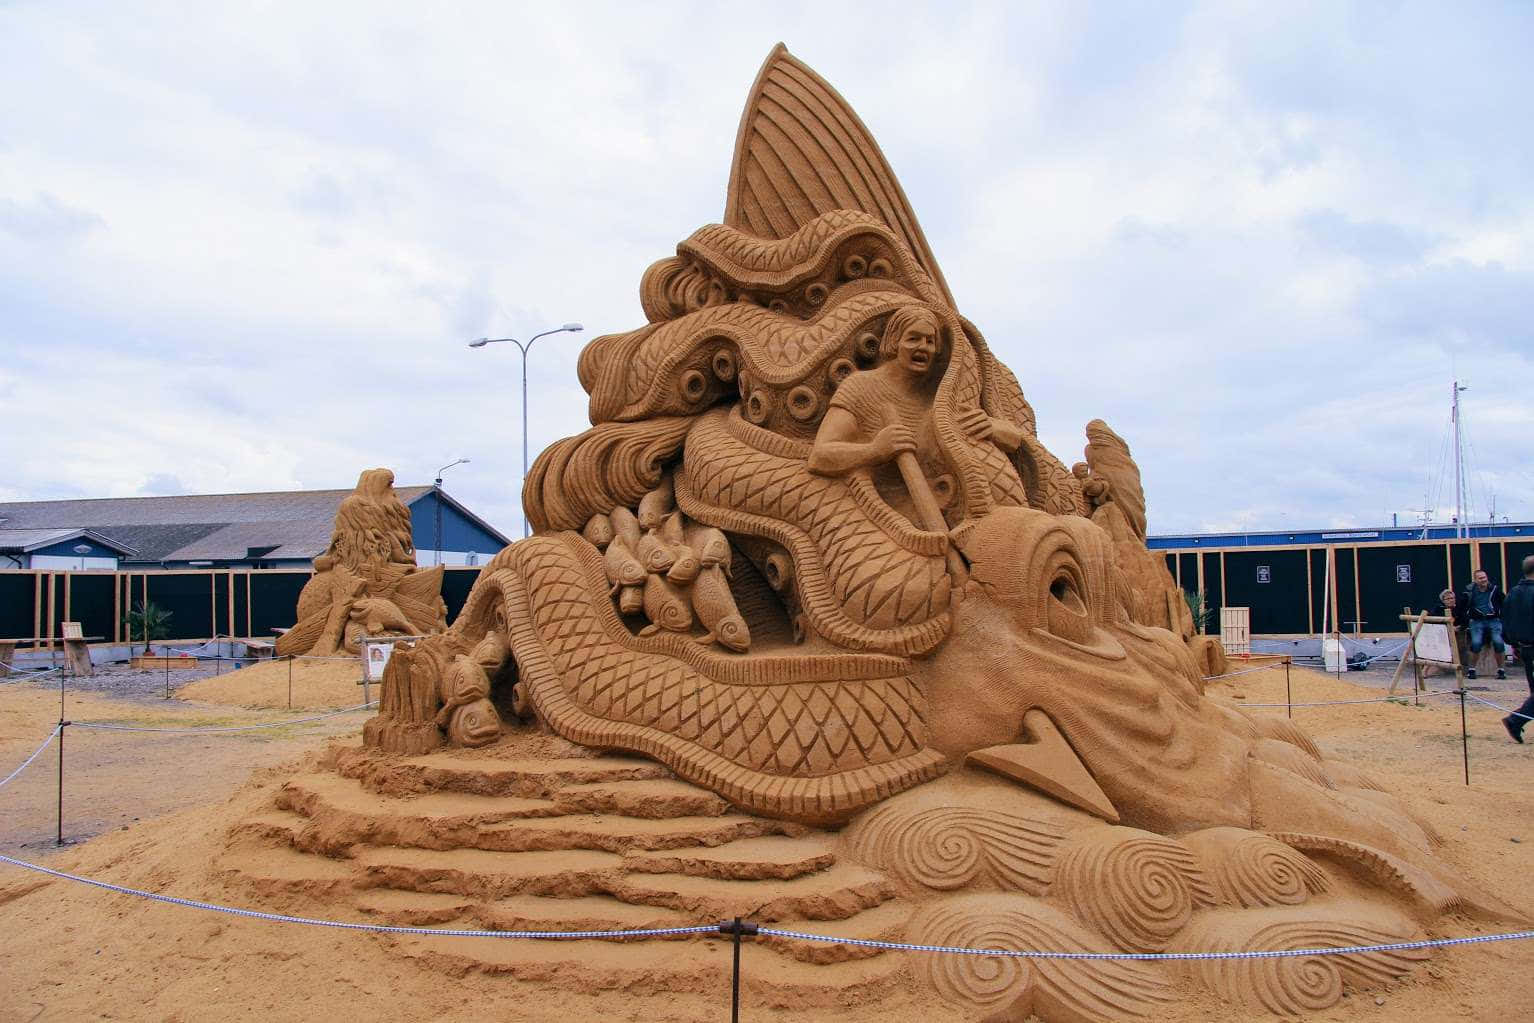 "Celebrate Creativity with Amazing Sand Art"